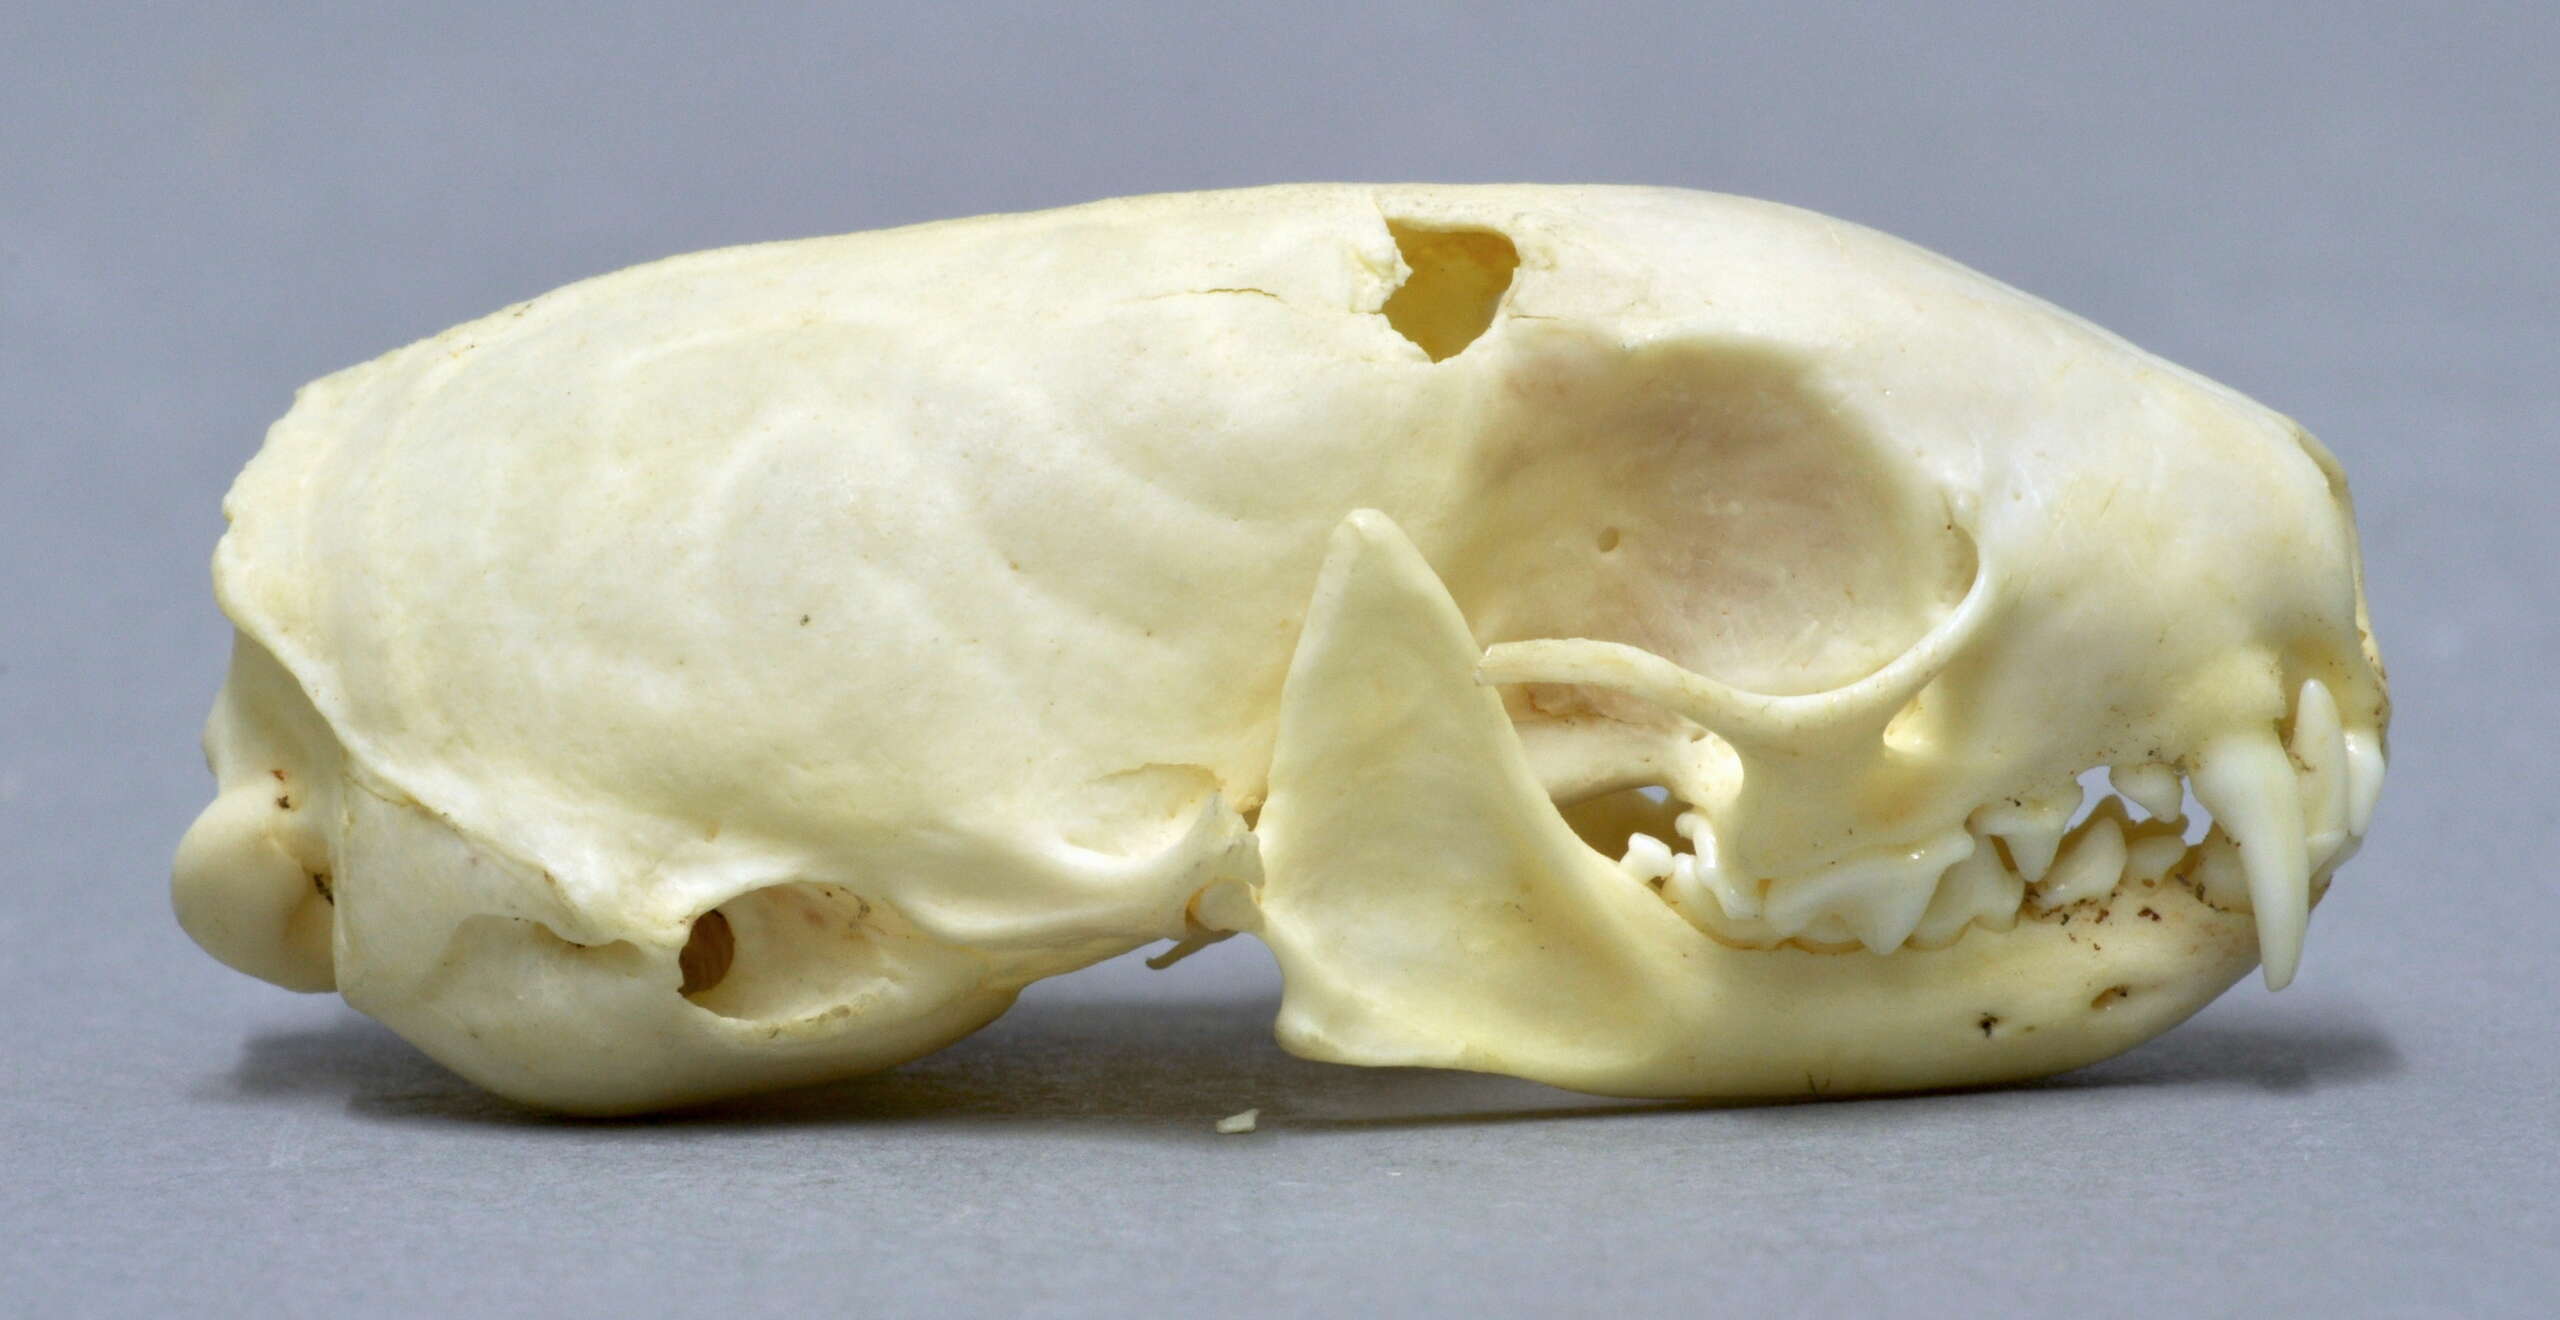 Stoat skull (credit Klaus Rassinger und Gerhard Cammerer, Museum Wiesbaden)